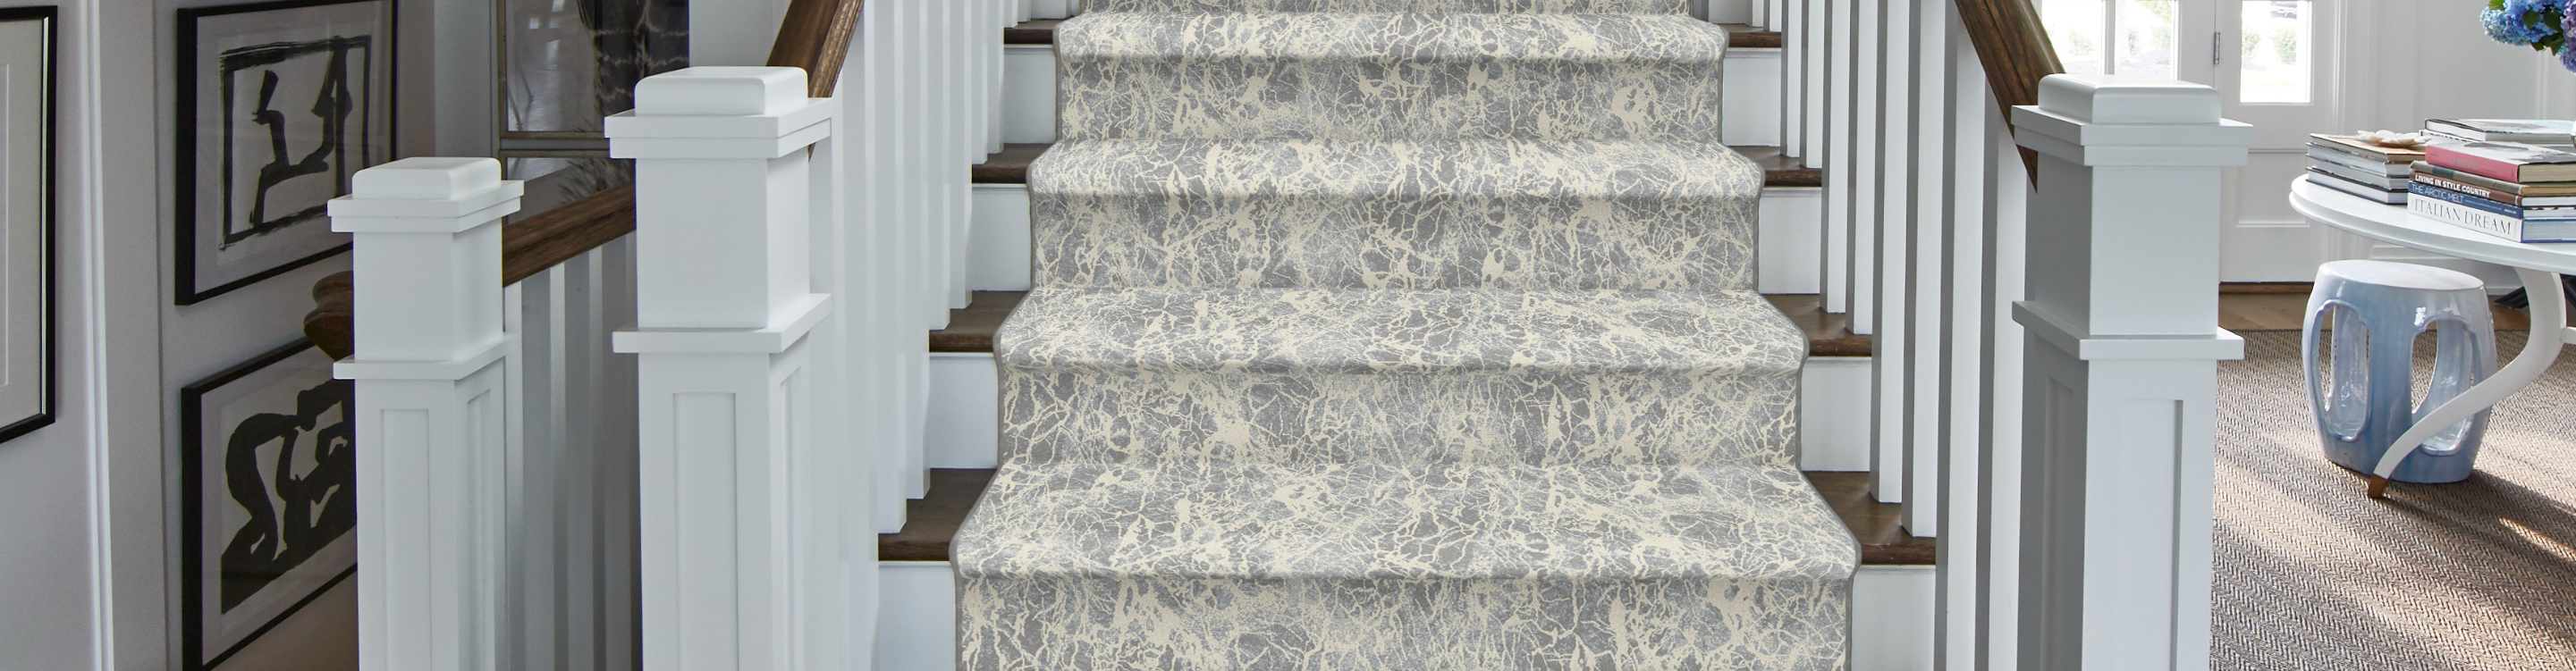 Patterned carpet stair runner on hardwood stairs. 